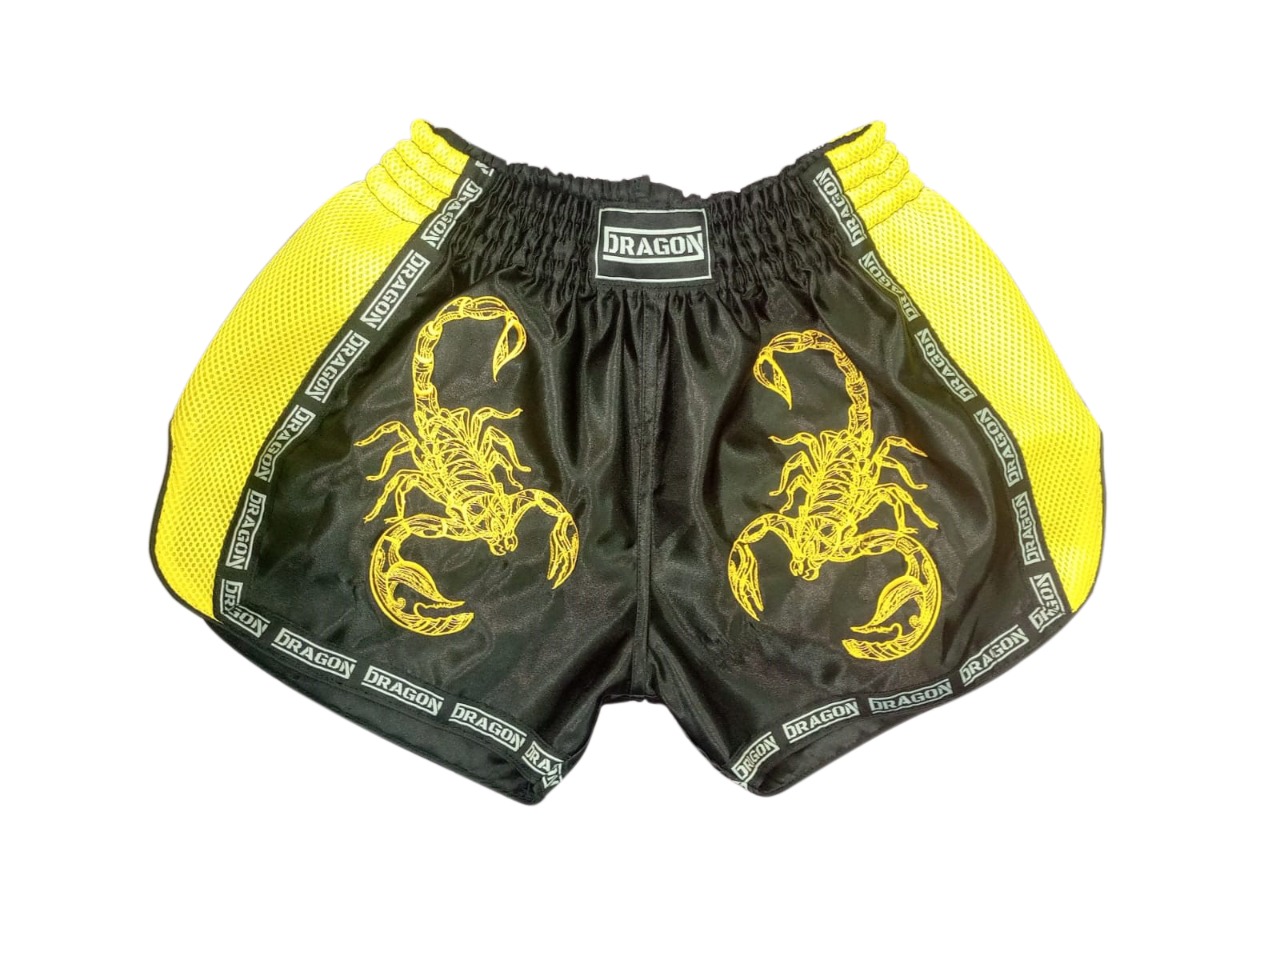 Dragon Muay Thai Shorts buy 2 get 1 free